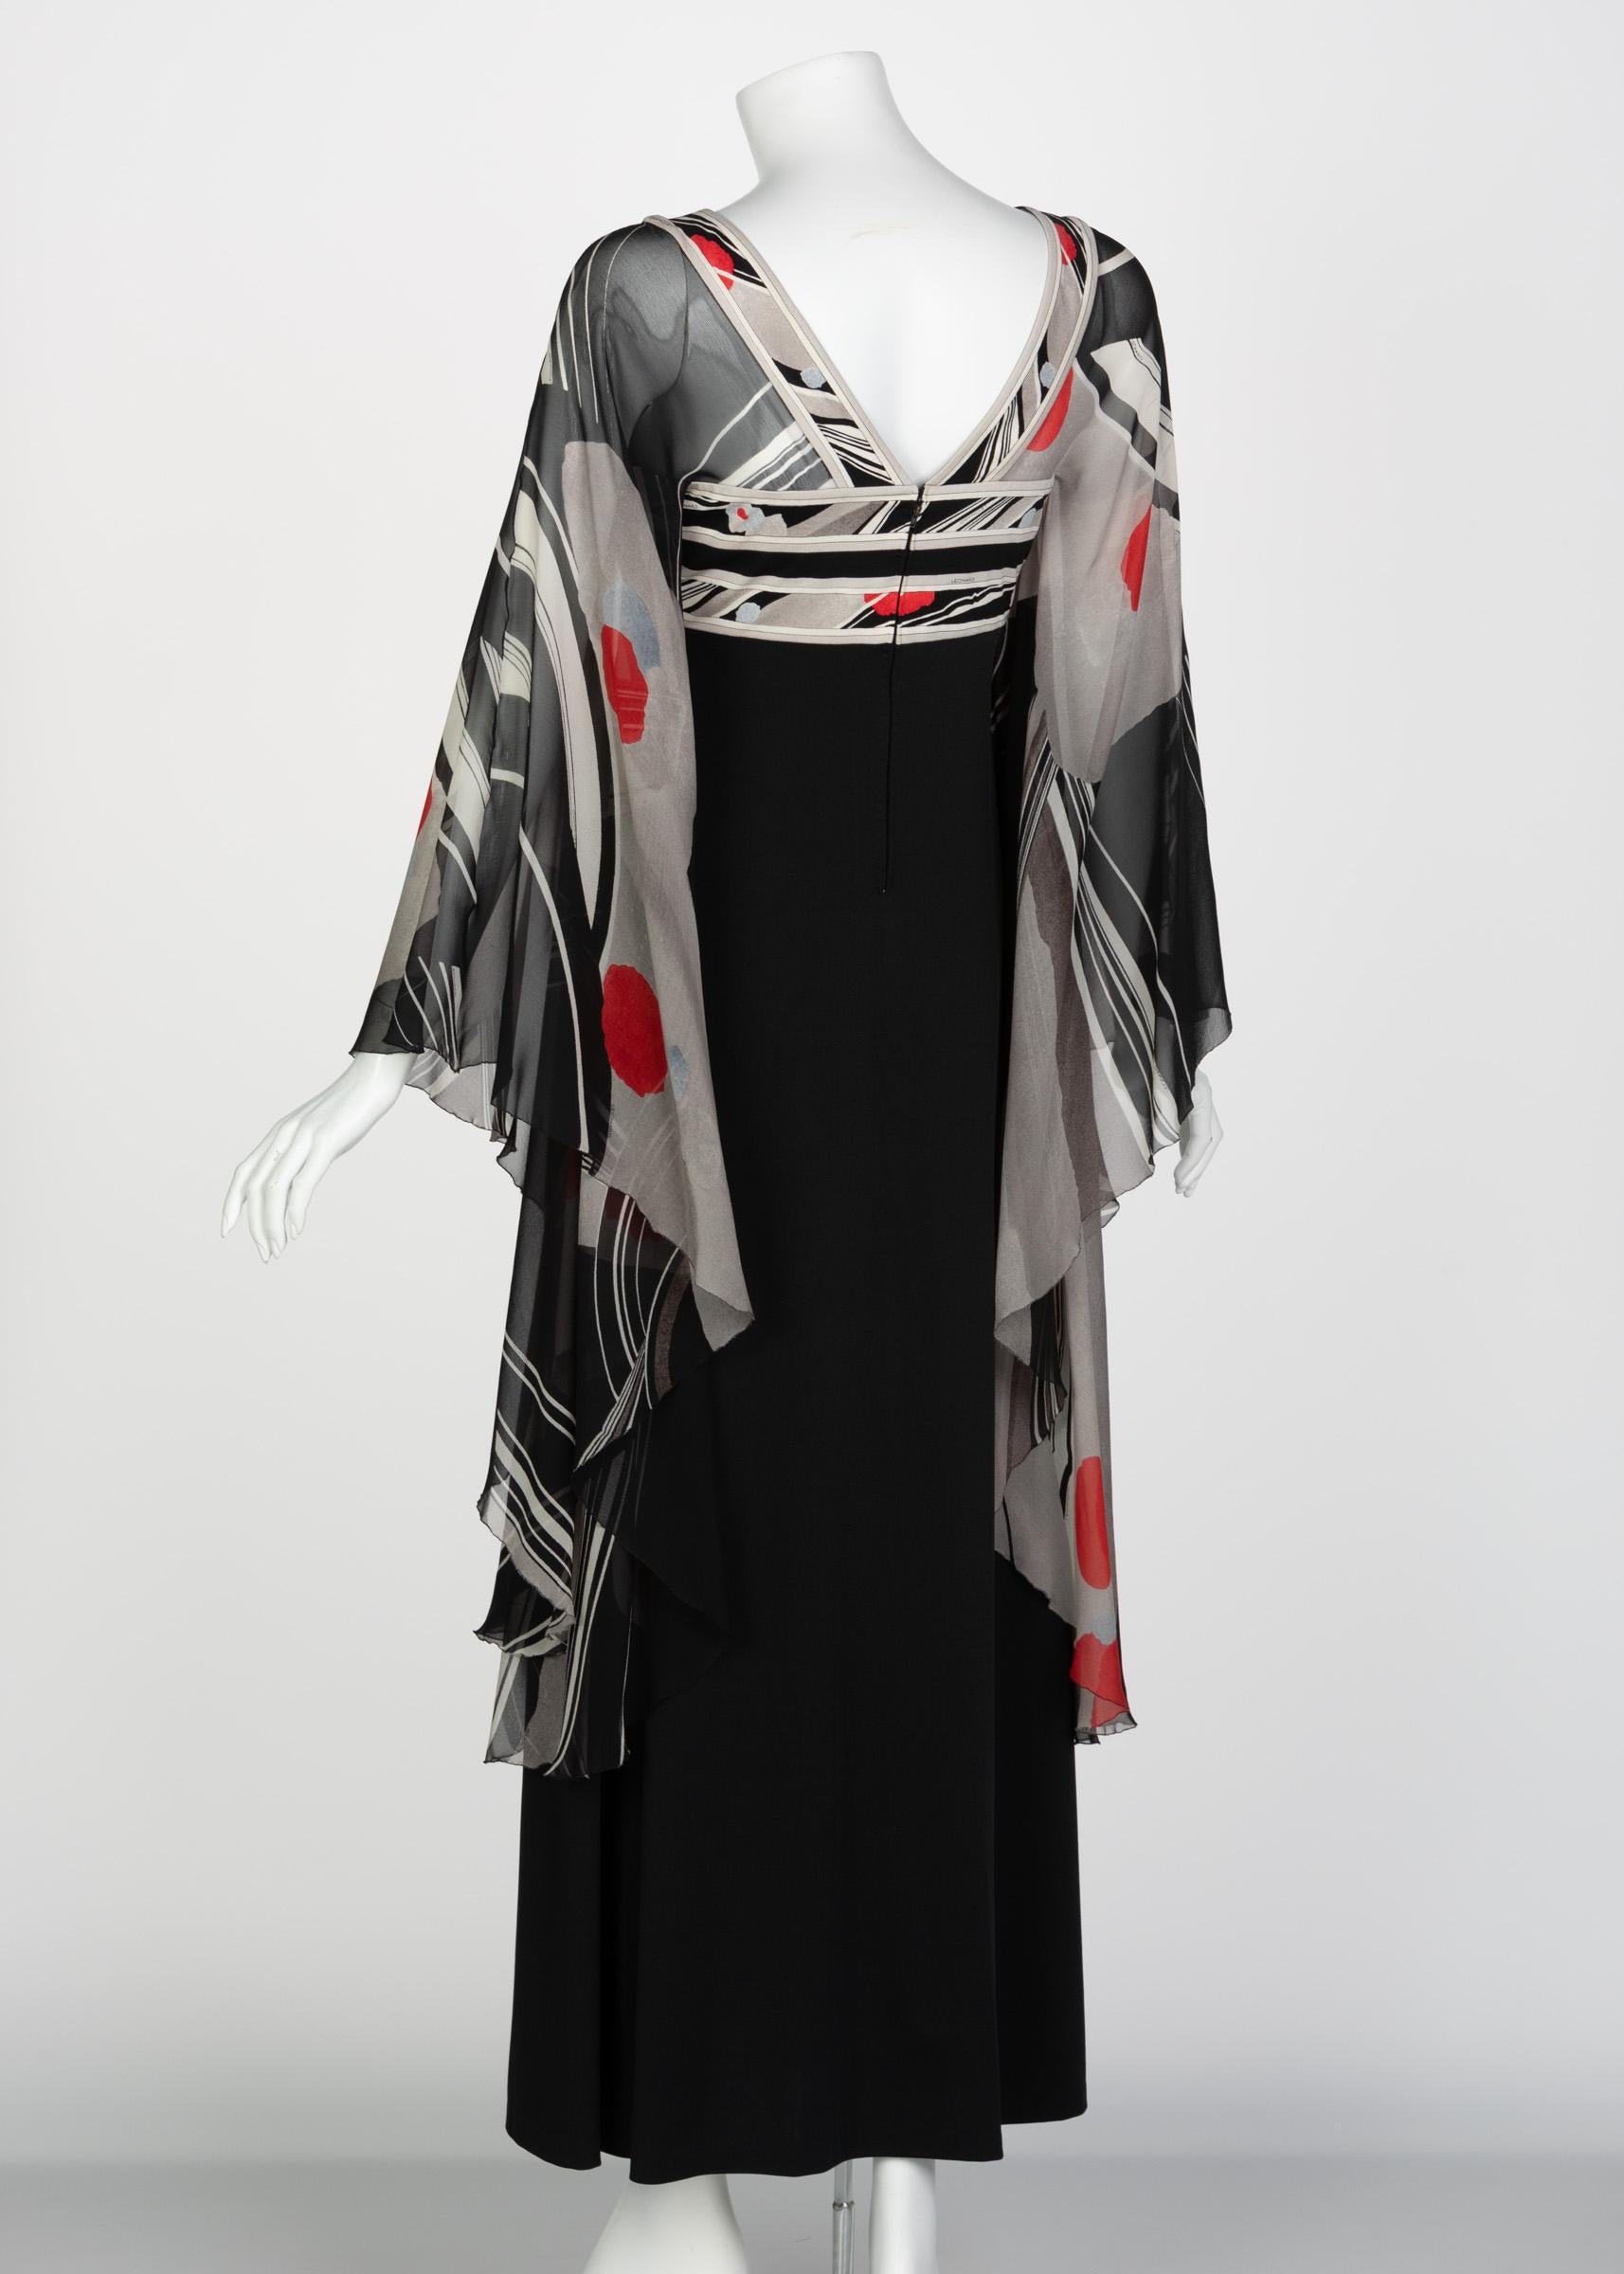 Leonard Paris Angel Sleeve Caftan Dress, 1970s In Excellent Condition For Sale In Boca Raton, FL